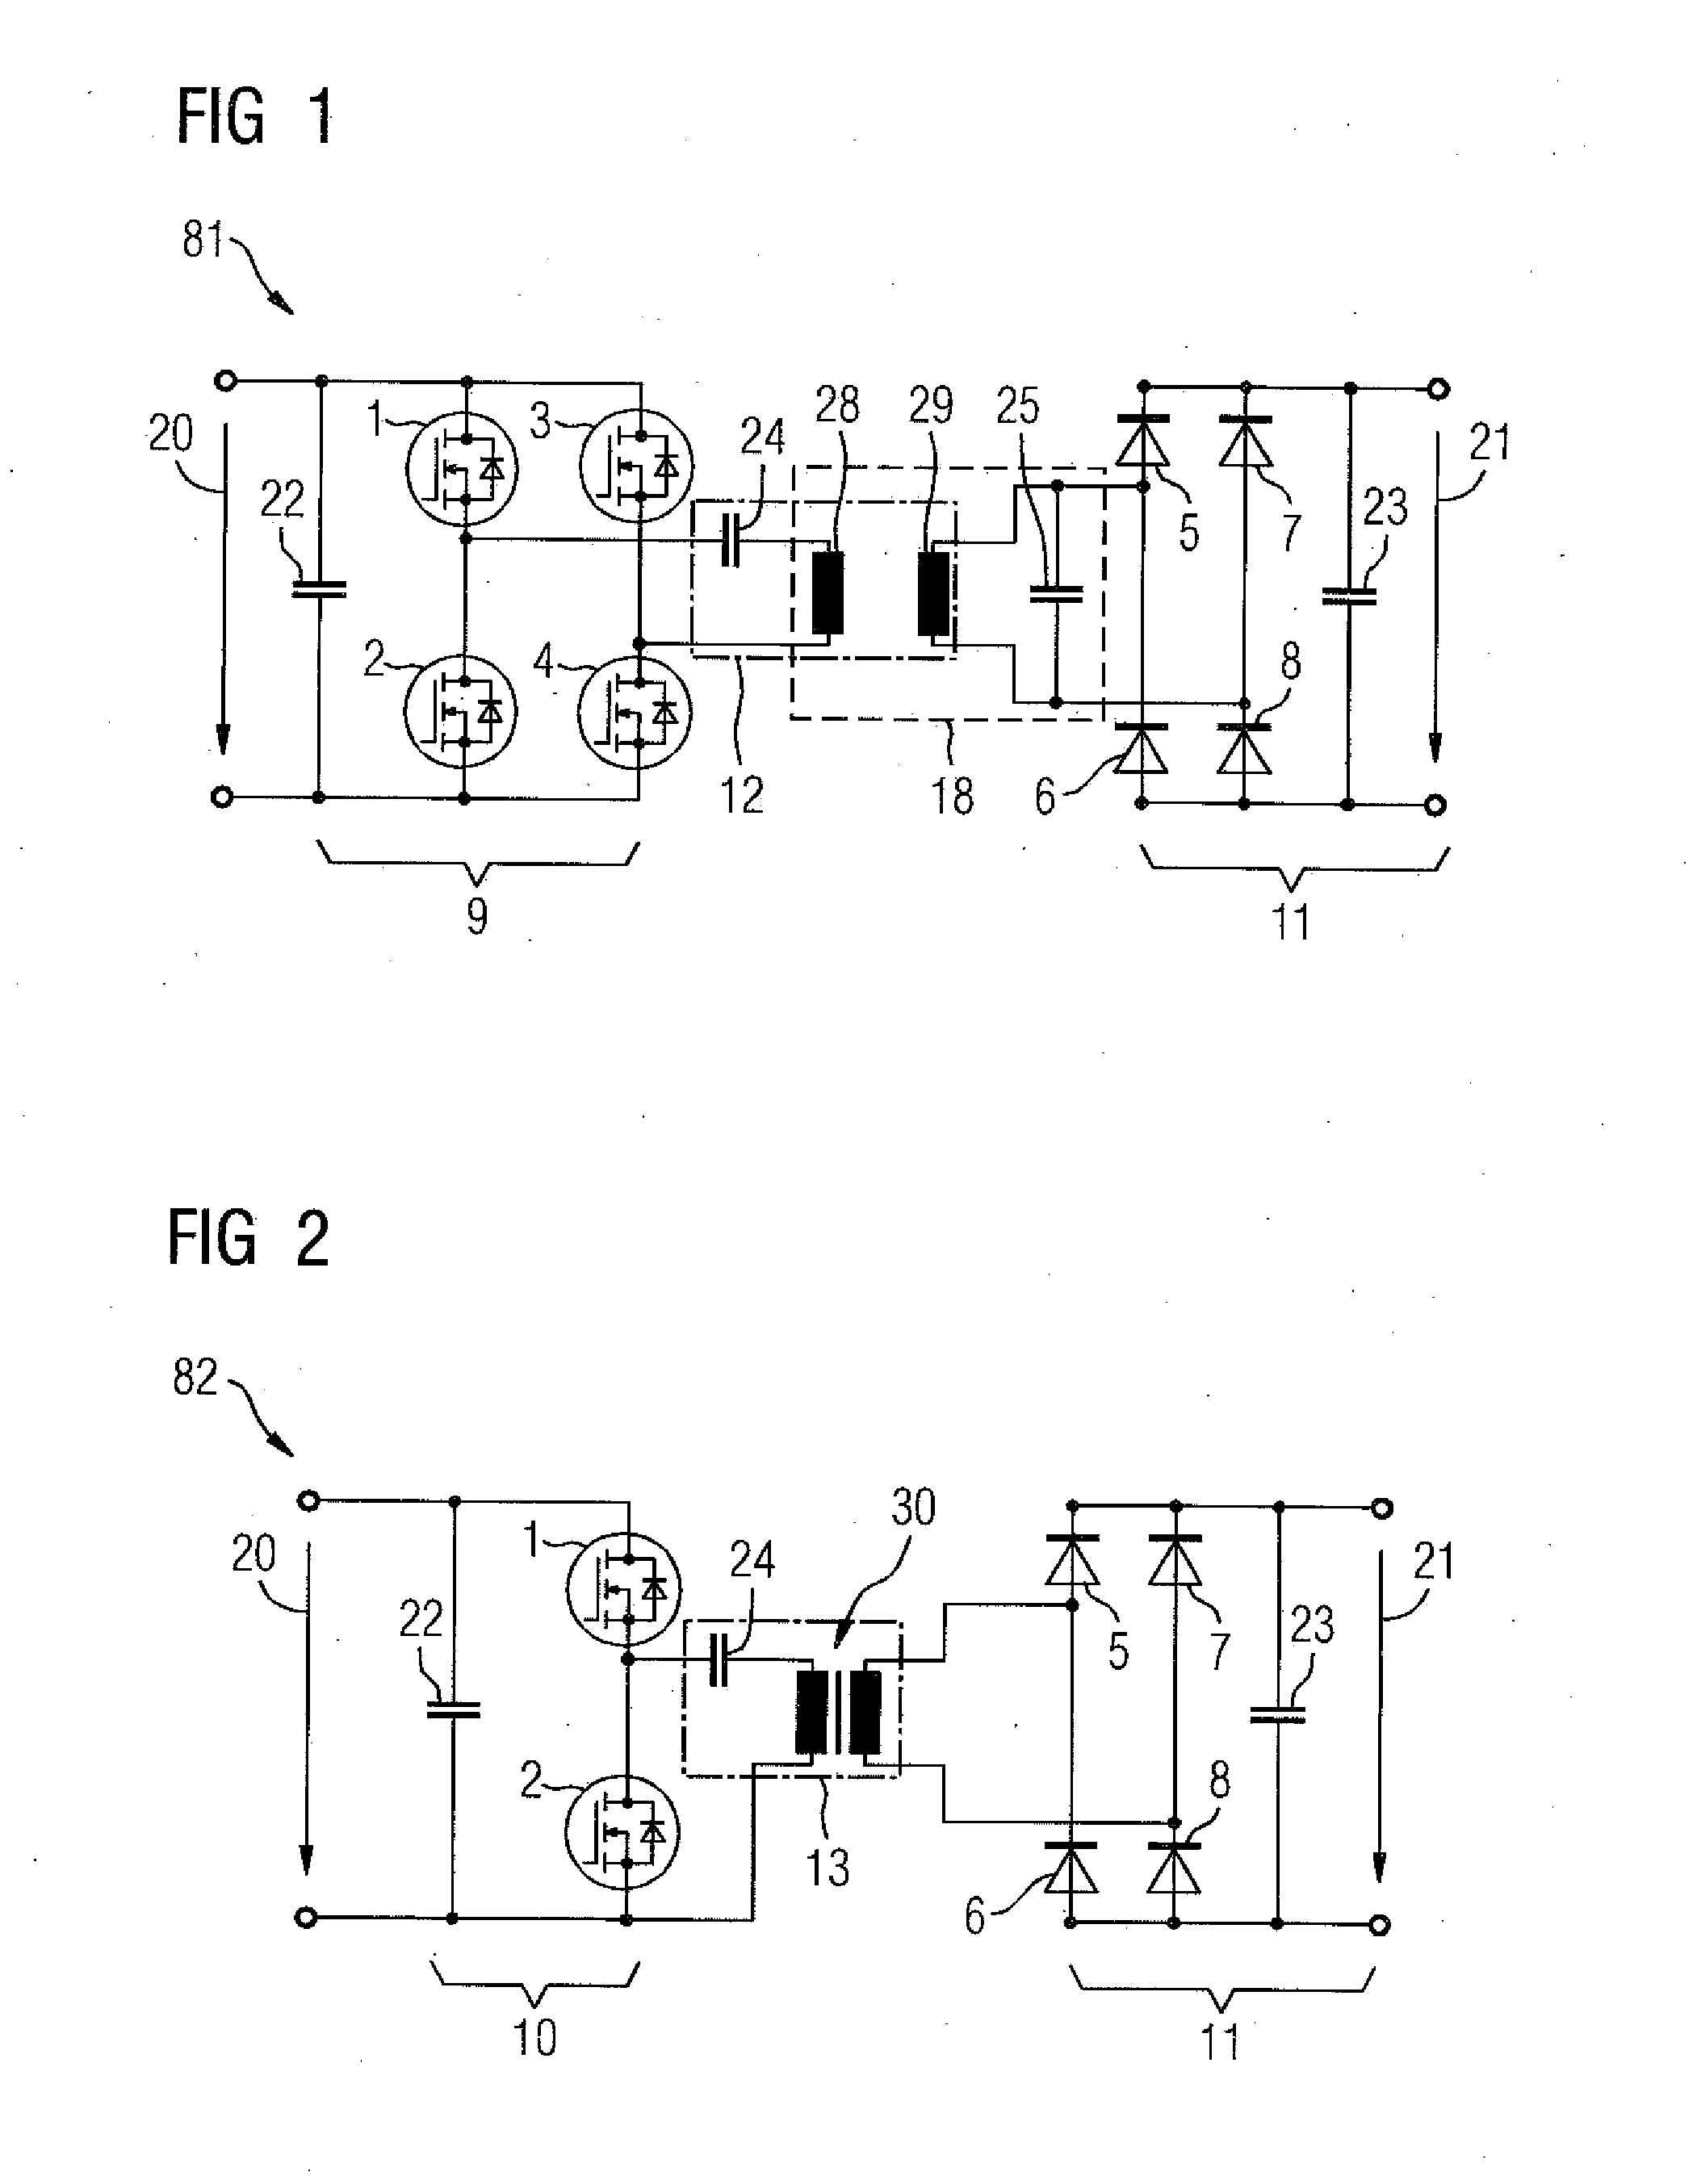 Heatable capacitor and circuit arrangement